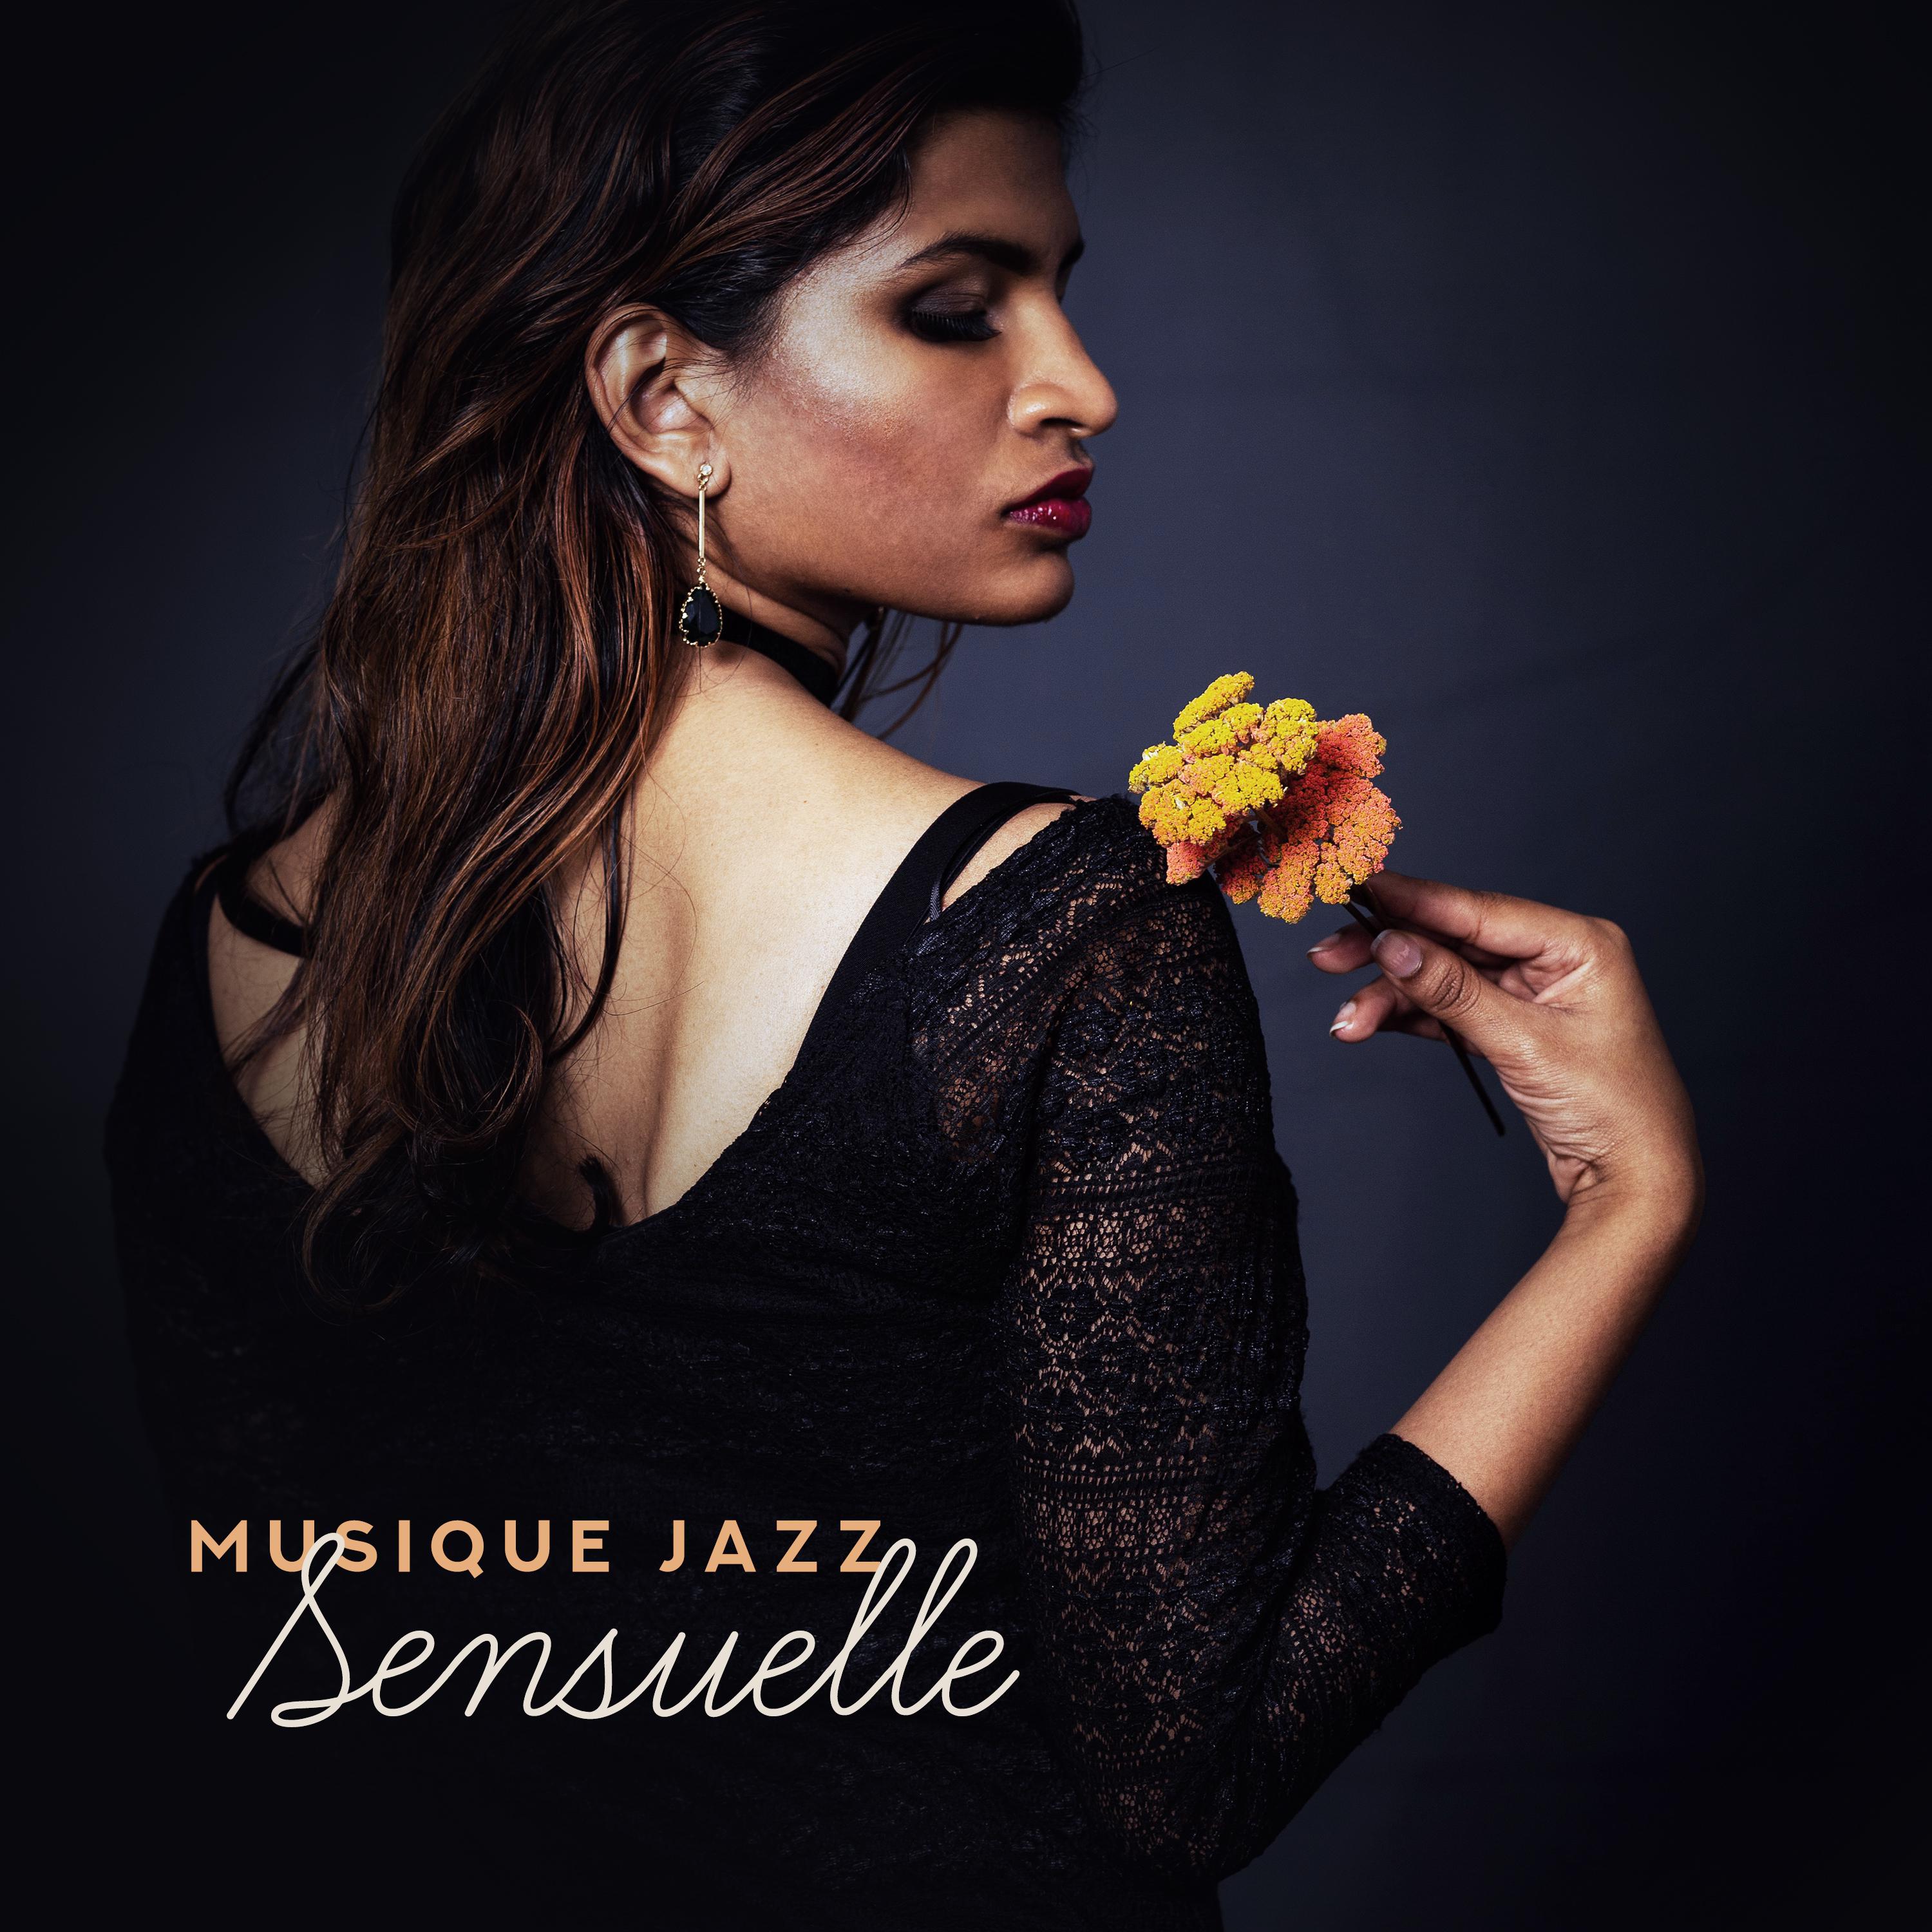 Musique Jazz Sensuelle  Compilation de Musique Smooth Jazz Fra che